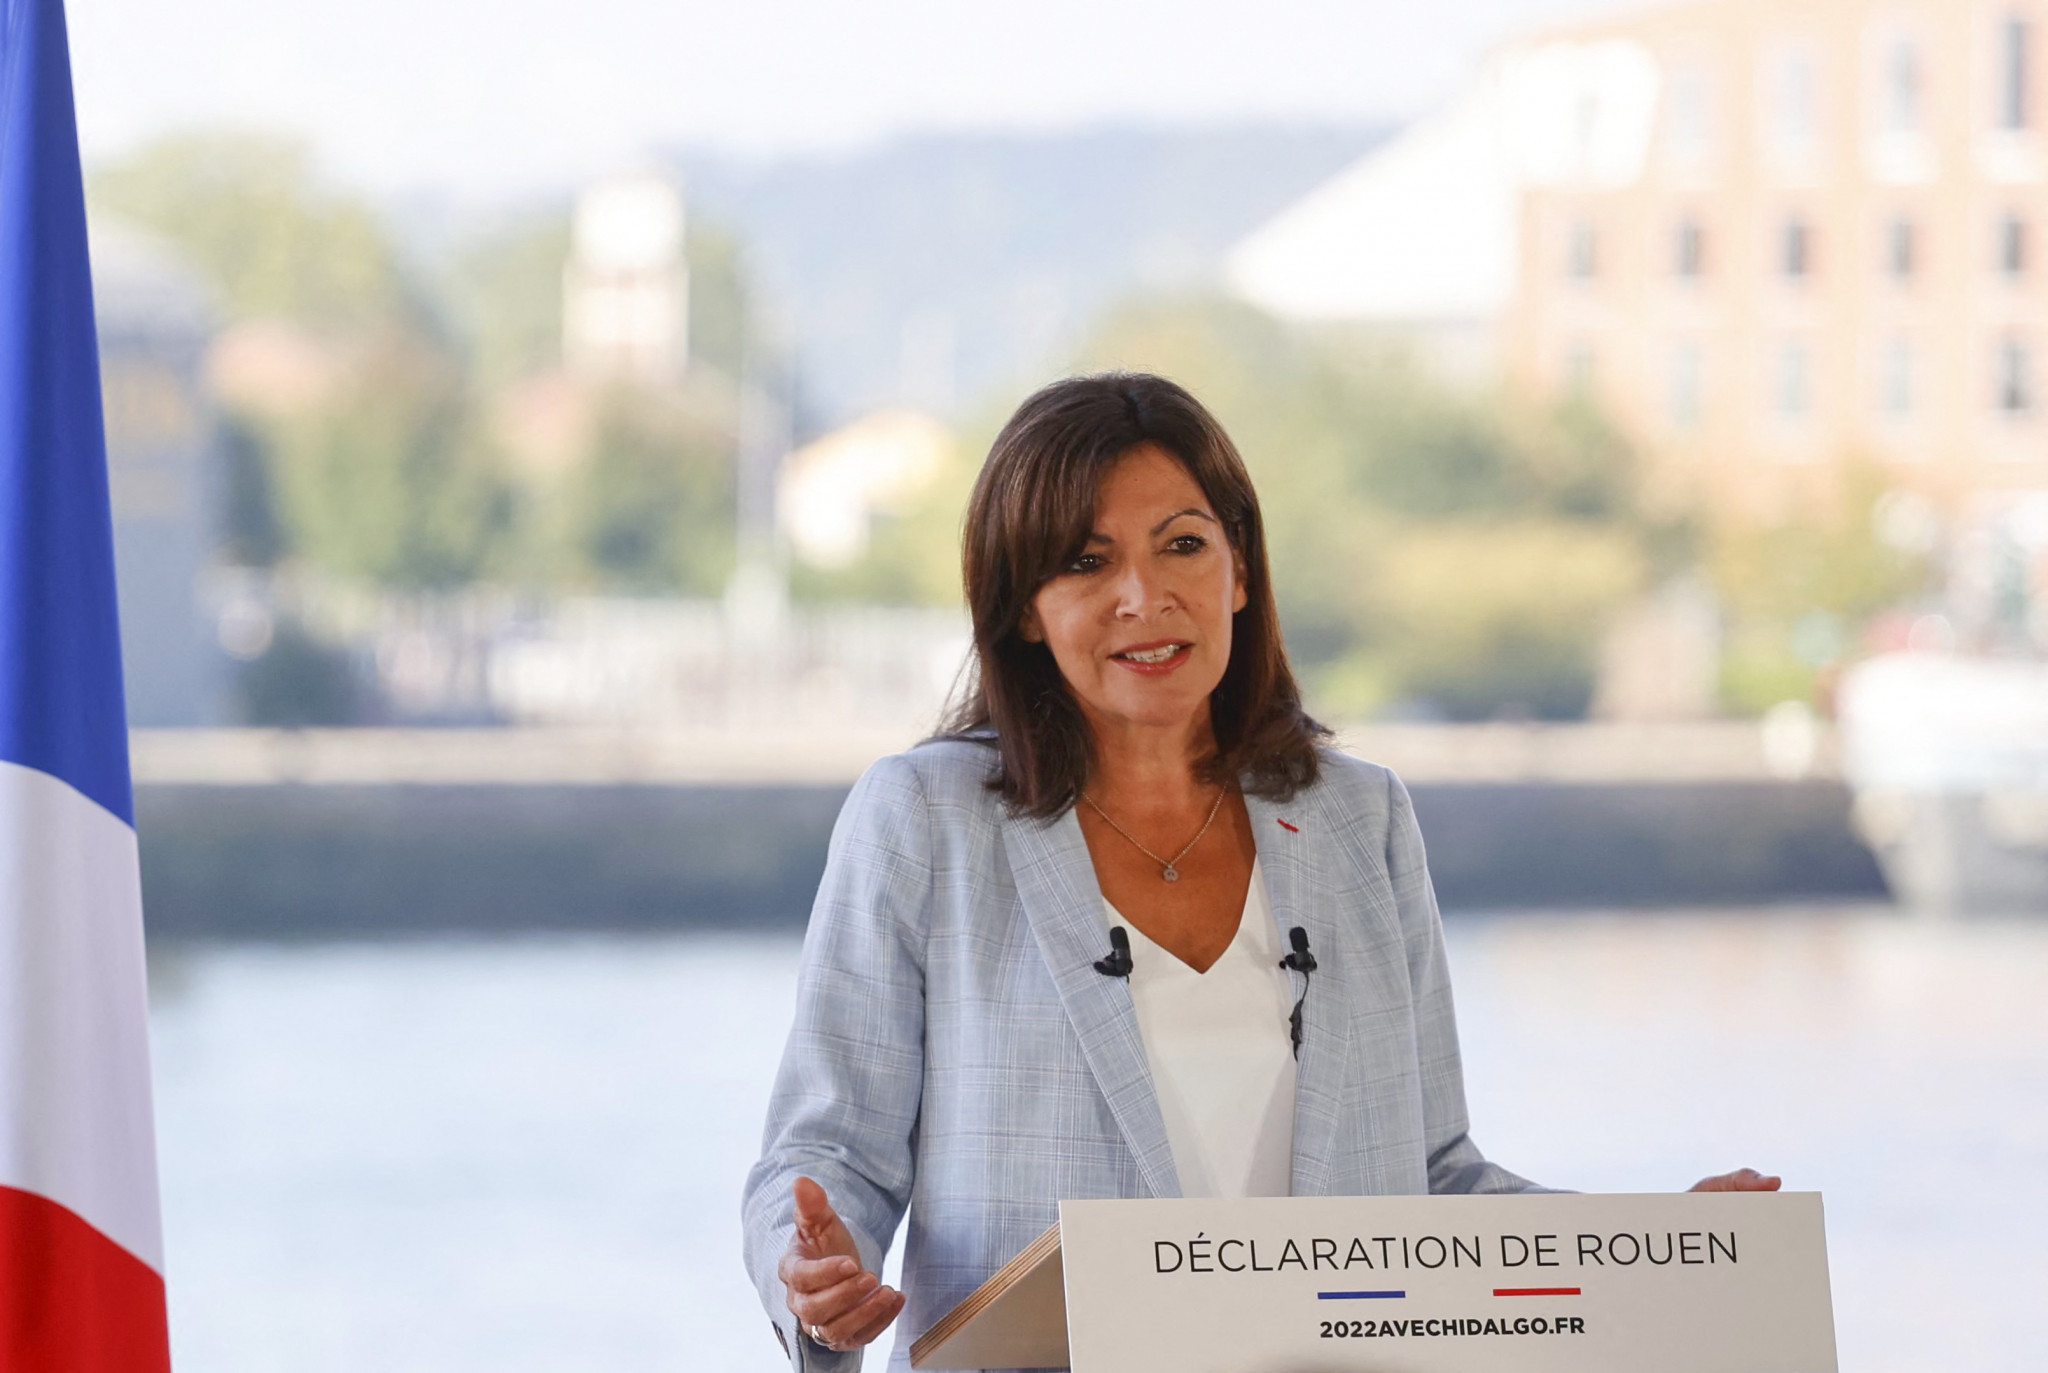 Paris Mayor Hidalgo confirms entry into French Presidential race